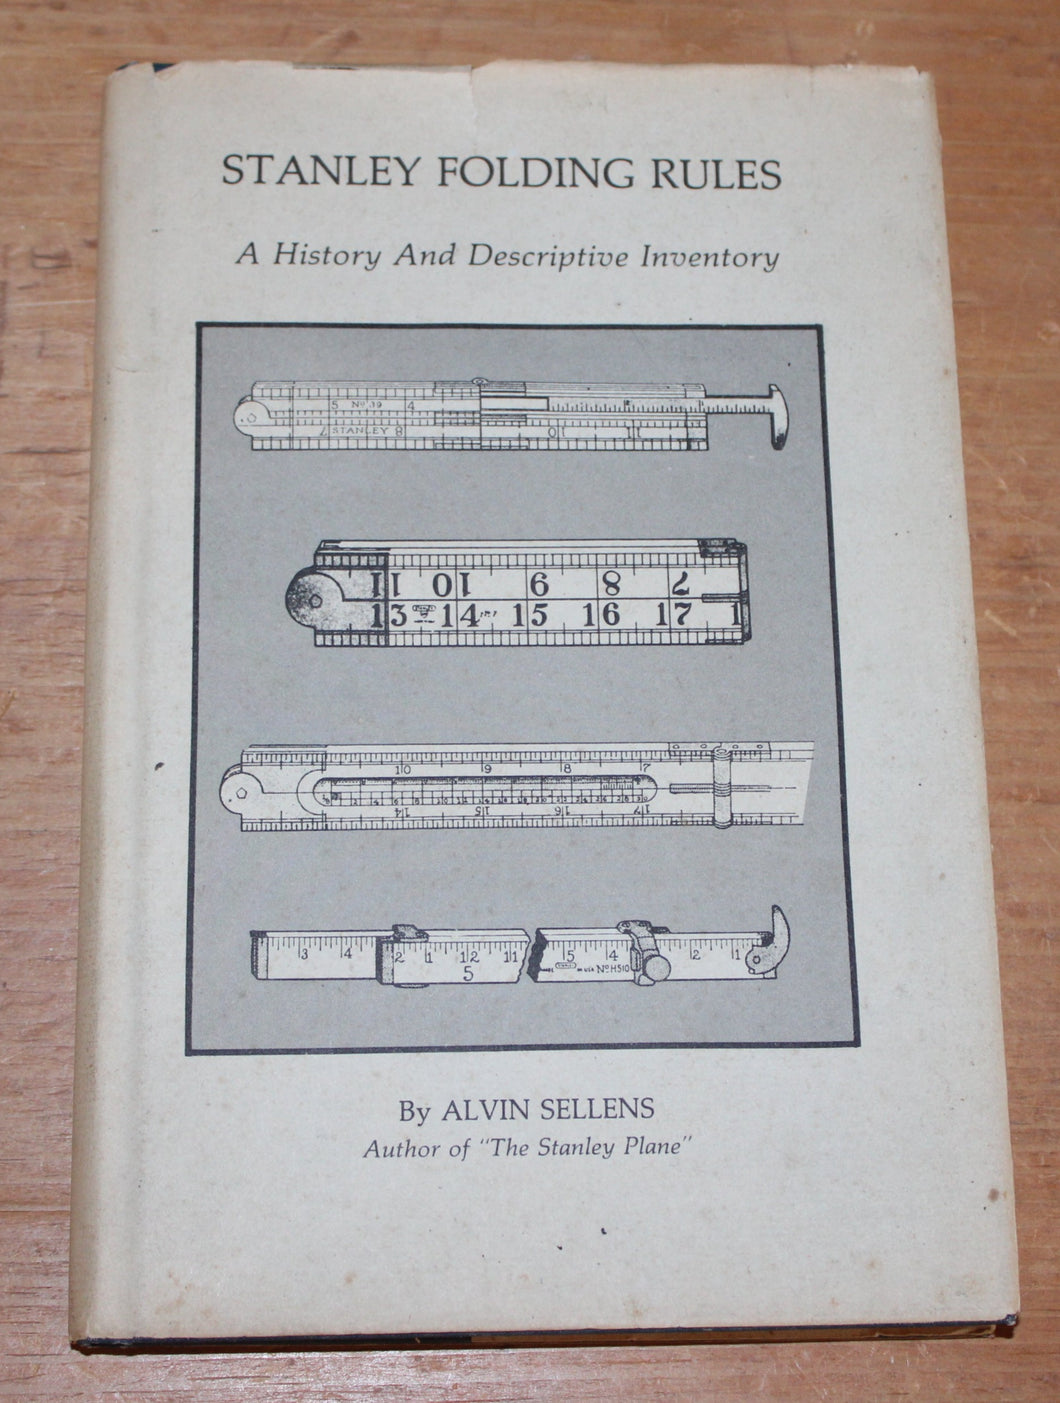 Stanley Folding Rules - A History & Descriptive Inventory - Alvin Sellens (1984)